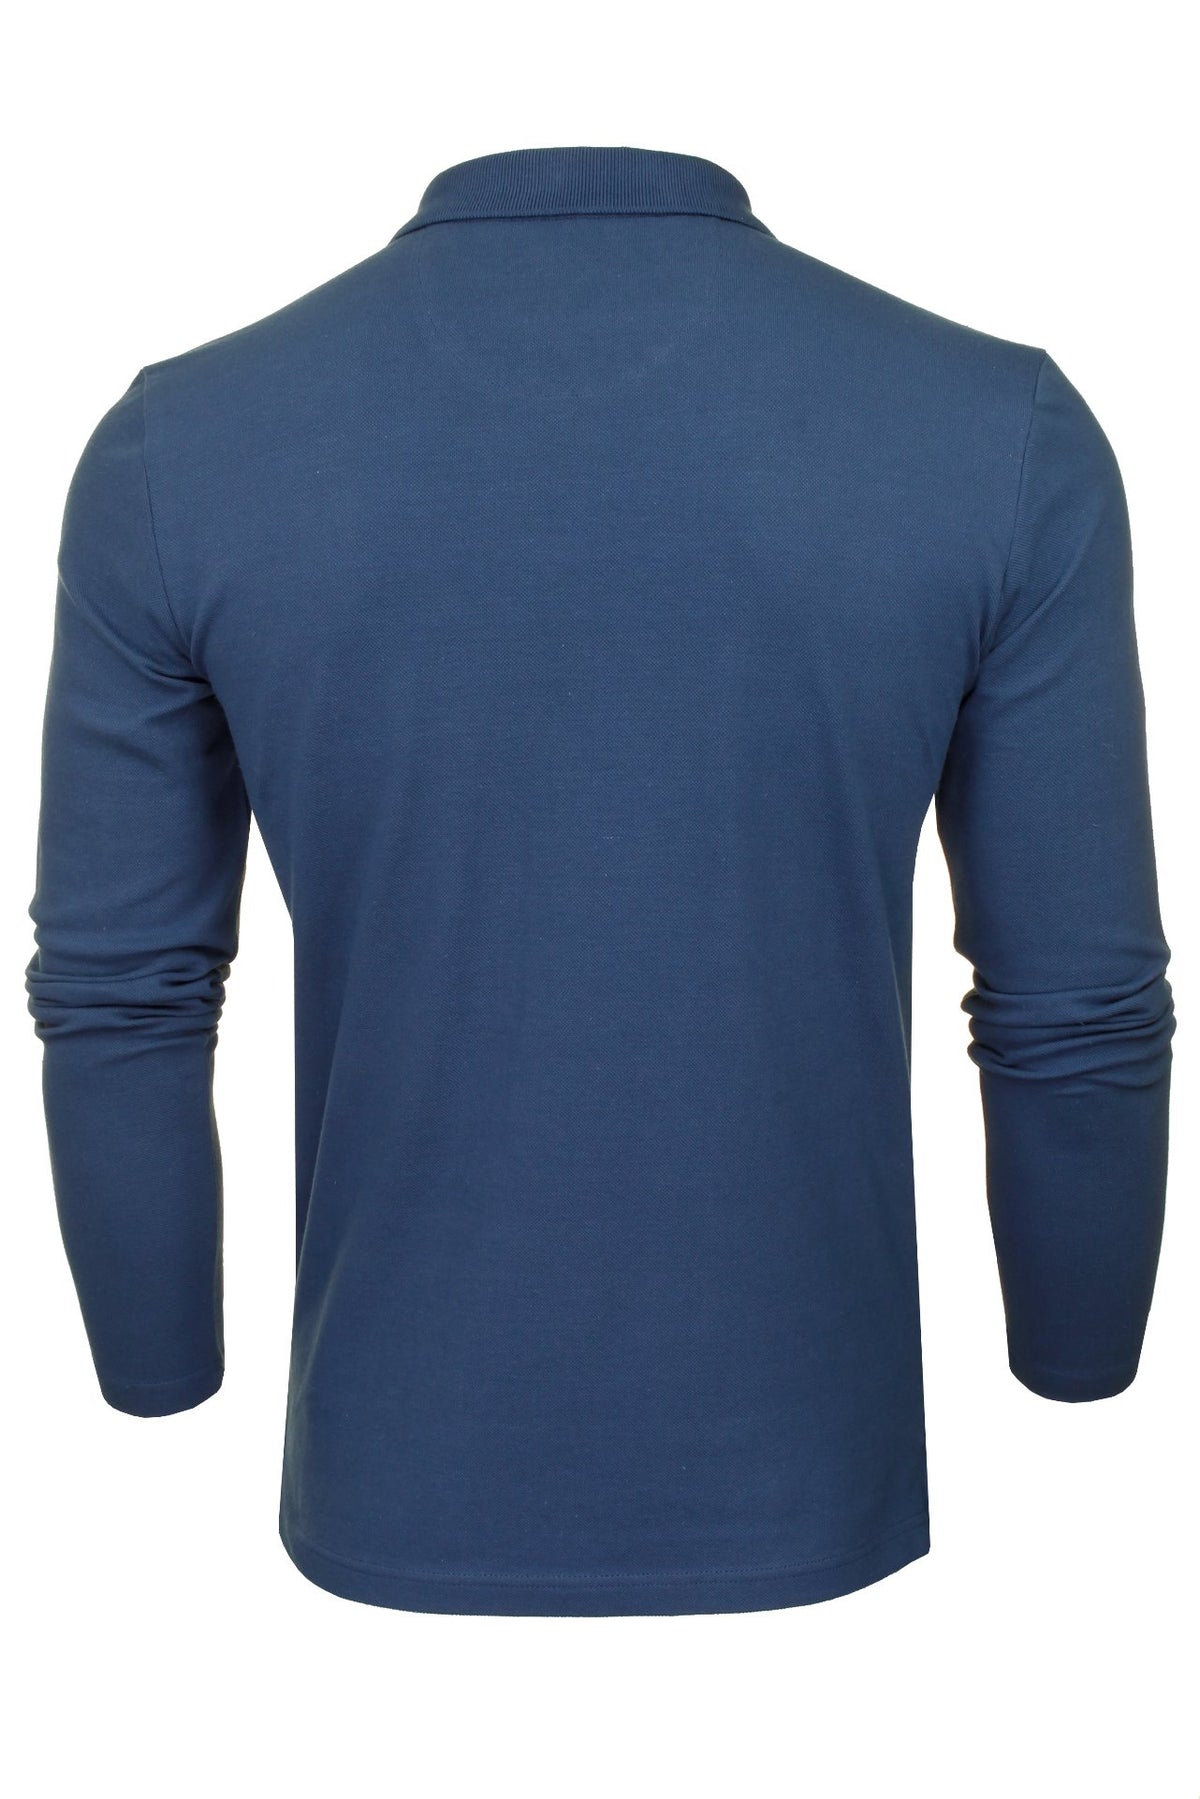 Xact Mens Polo T-Shirt Pique Long Sleeved, 03, XP1003, Vintage Blue